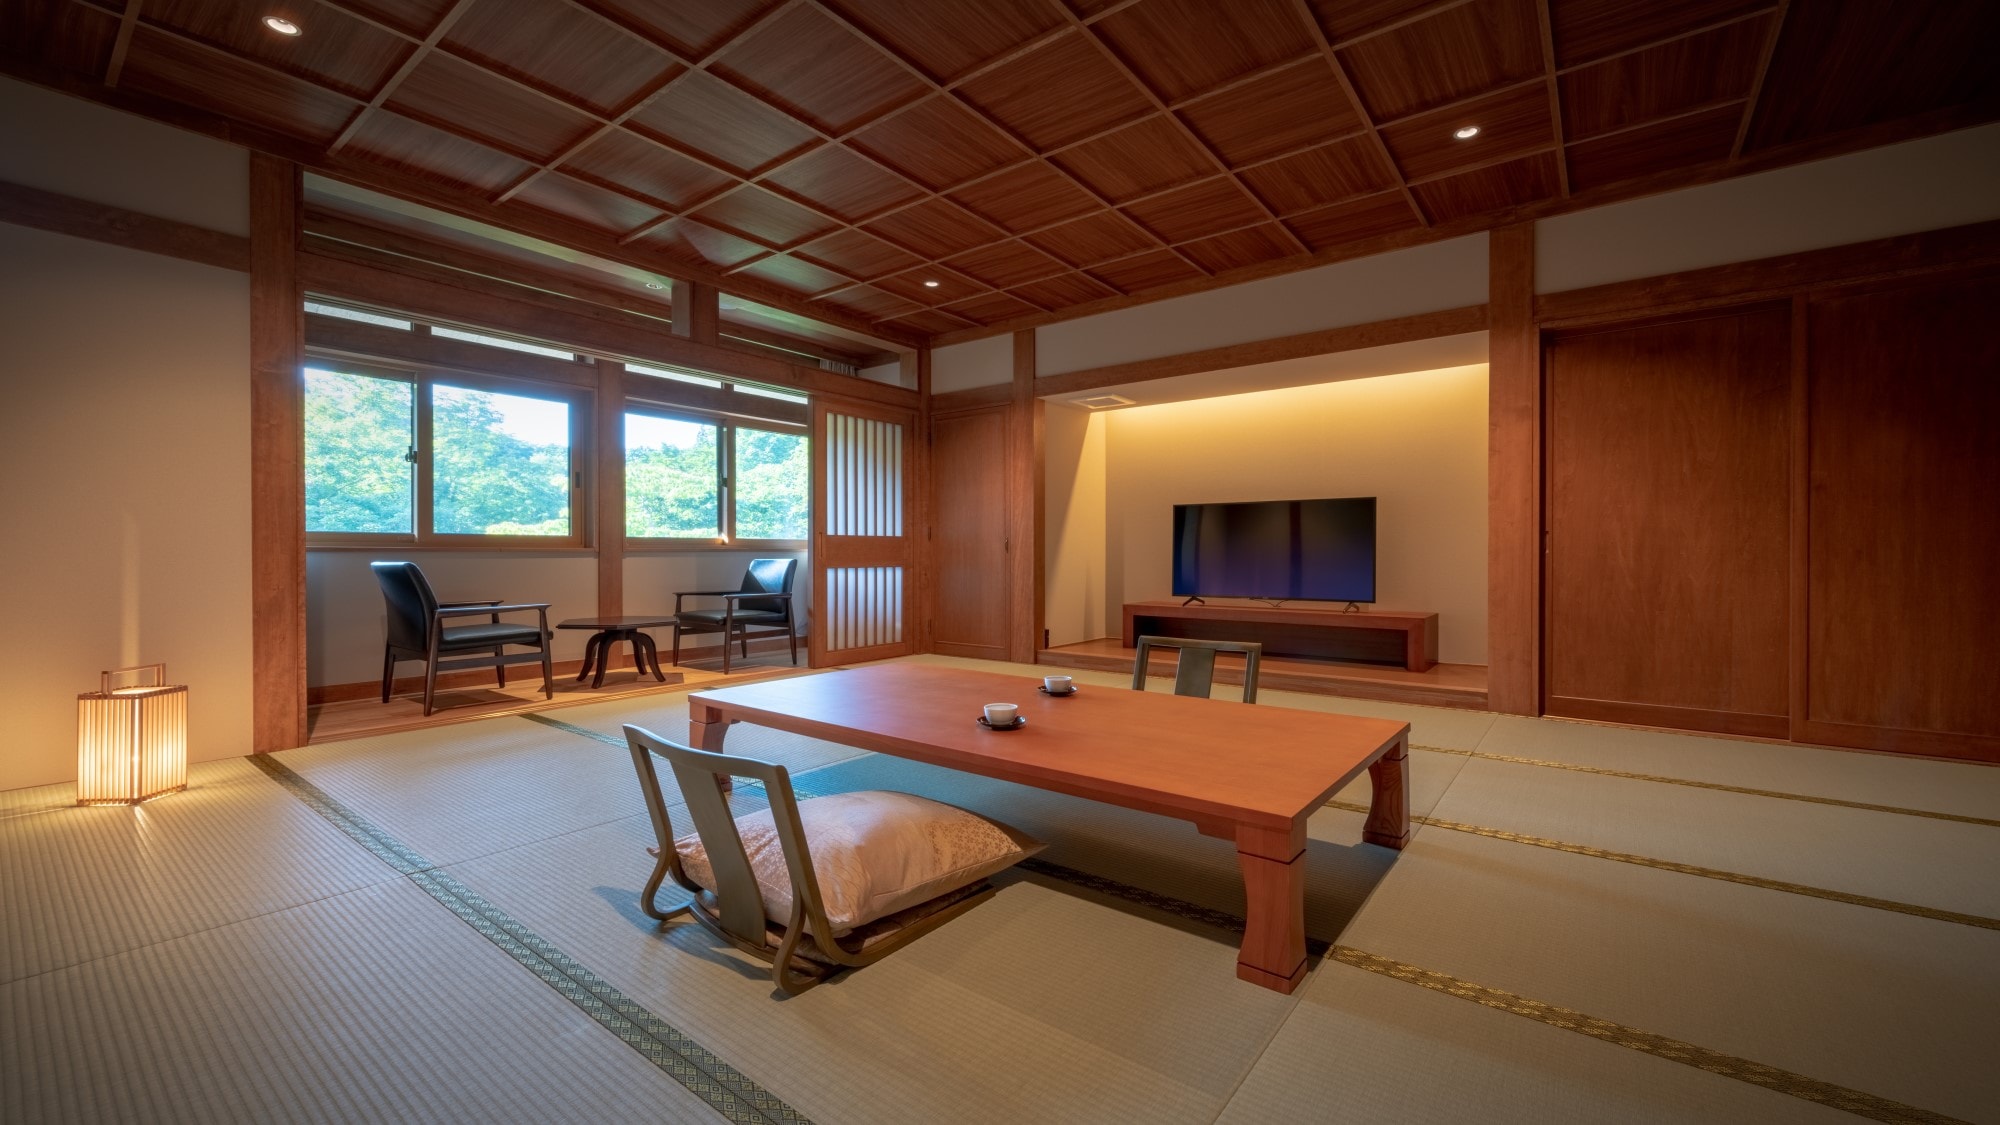 Kamar tamu baru Kamar bergaya Jepang (15 tikar tatami) baru didirikan pada tahun 2020 [Kapasitas 6 orang]